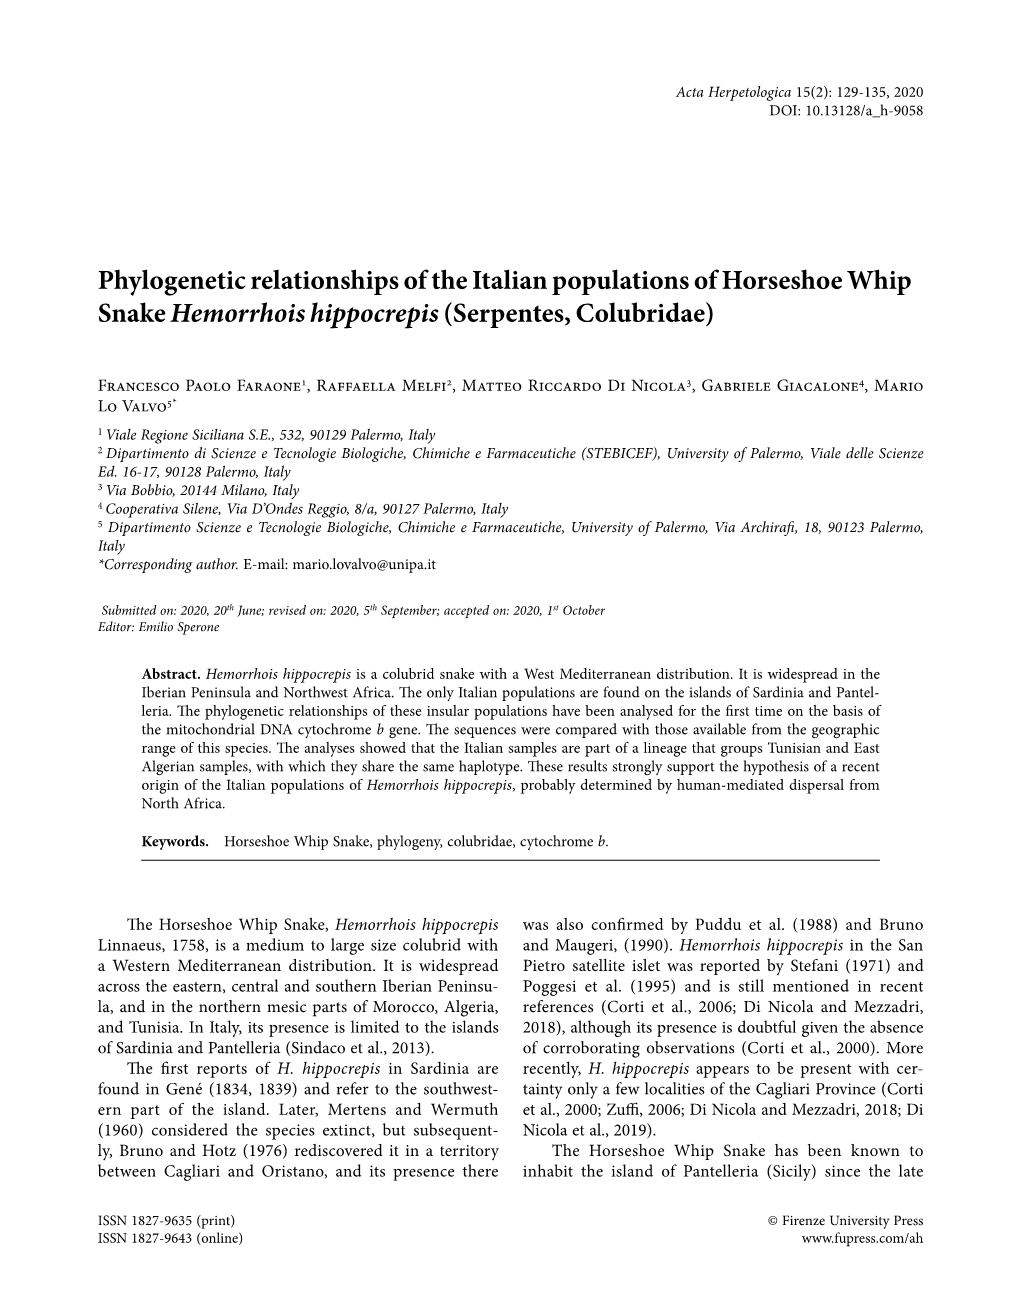 Phylogenetic Relationships of the Italian Populations of Horseshoe Whip Snake Hemorrhois Hippocrepis (Serpentes, Colubridae)